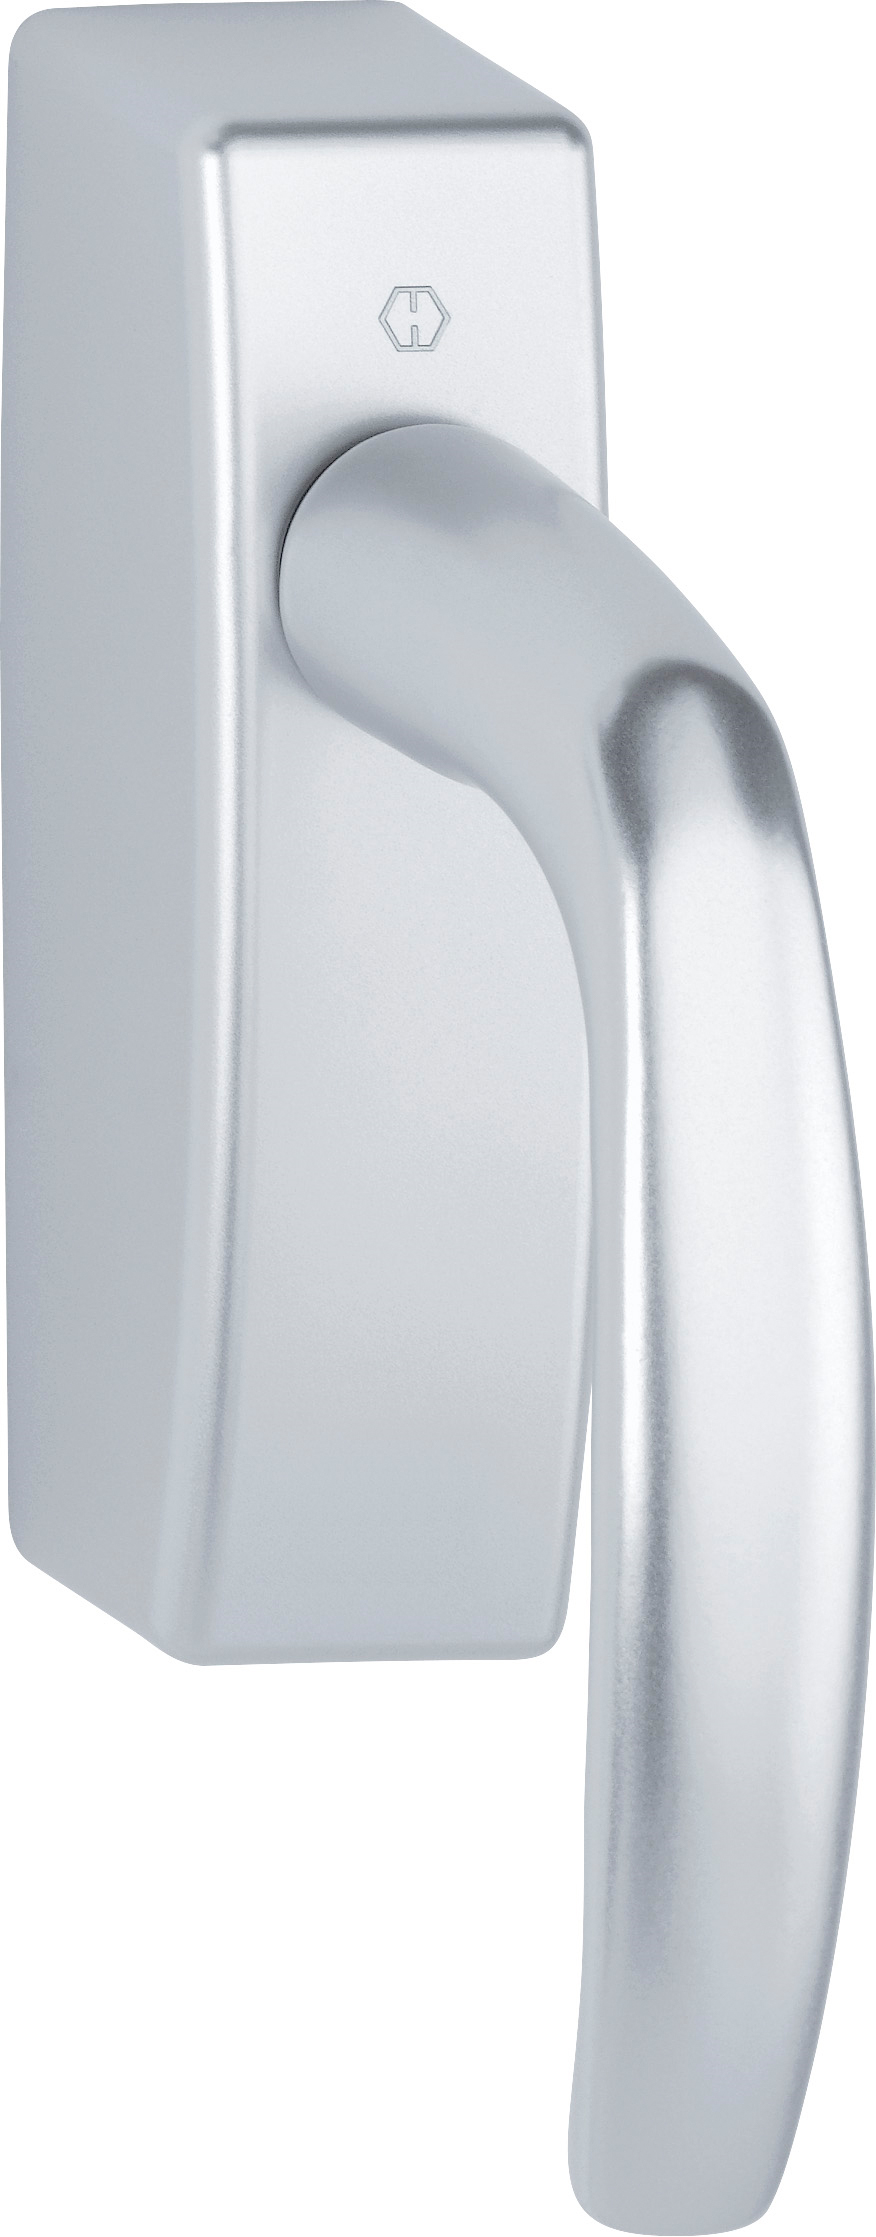 OPUS eWindow handgreep Atlanta aluminium zilver, 37 mm pin, bidirectioneel